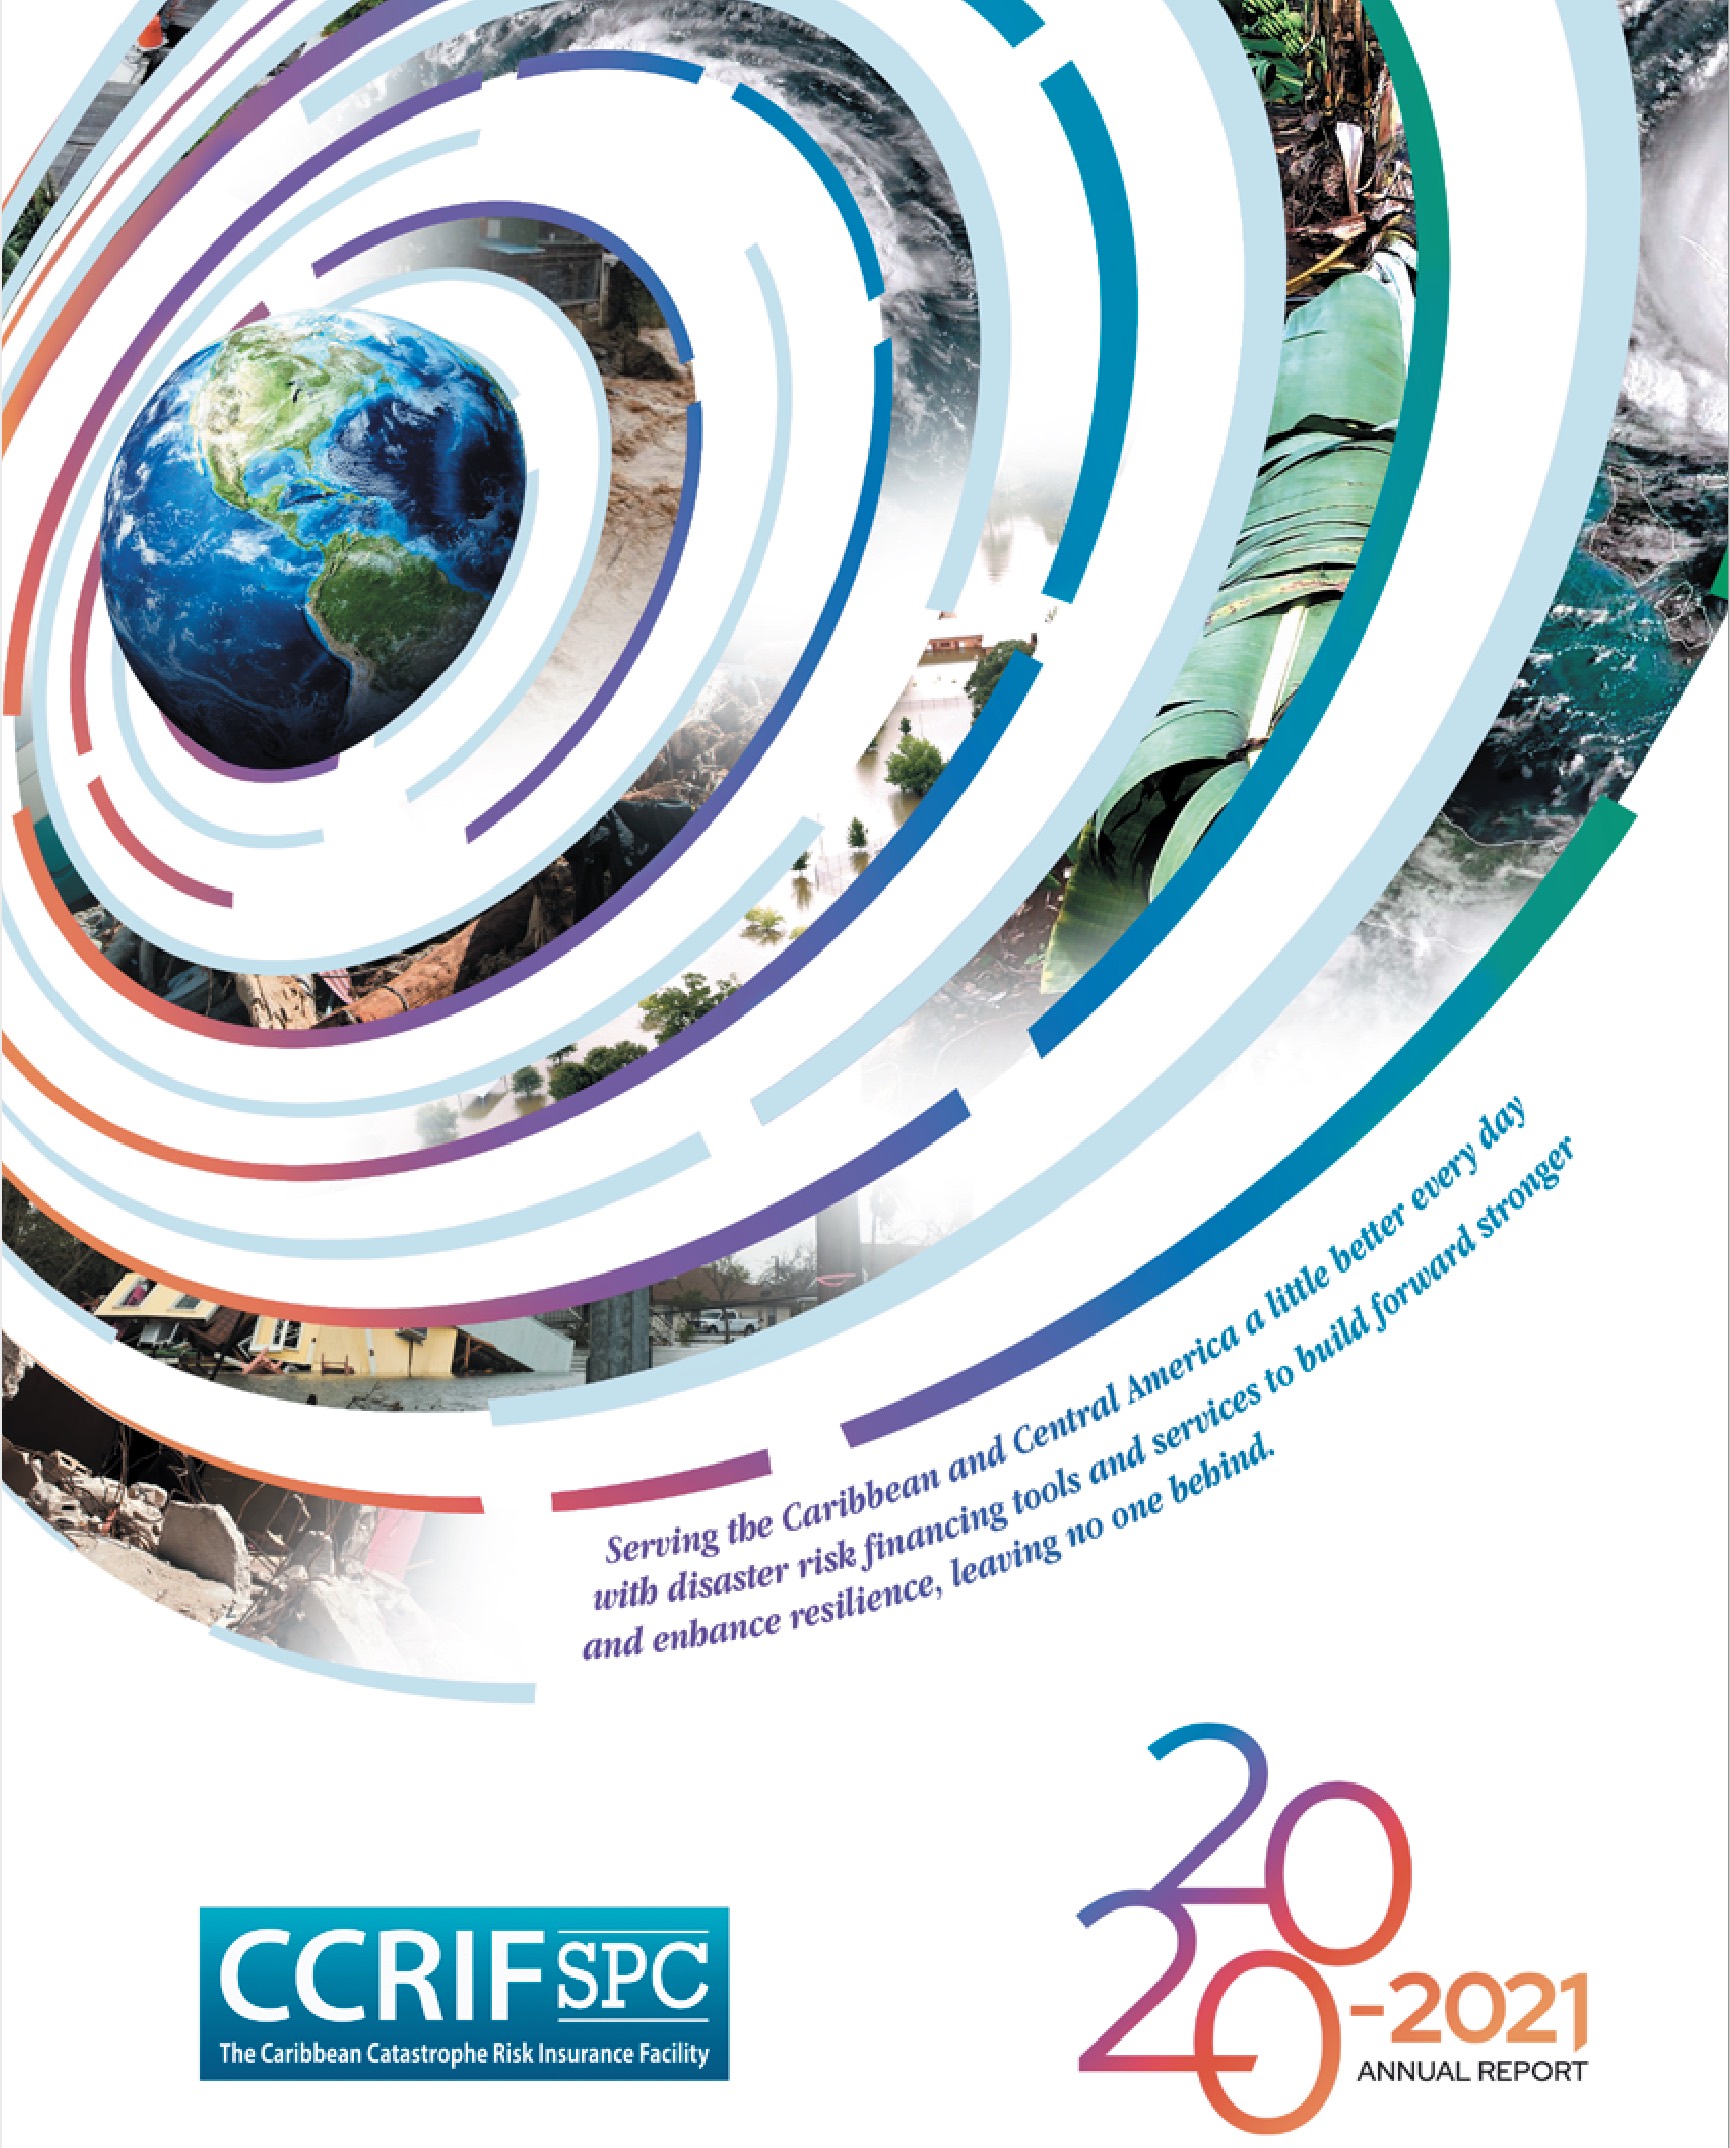 CCRIF SPC Annual Report 2020 - 2021